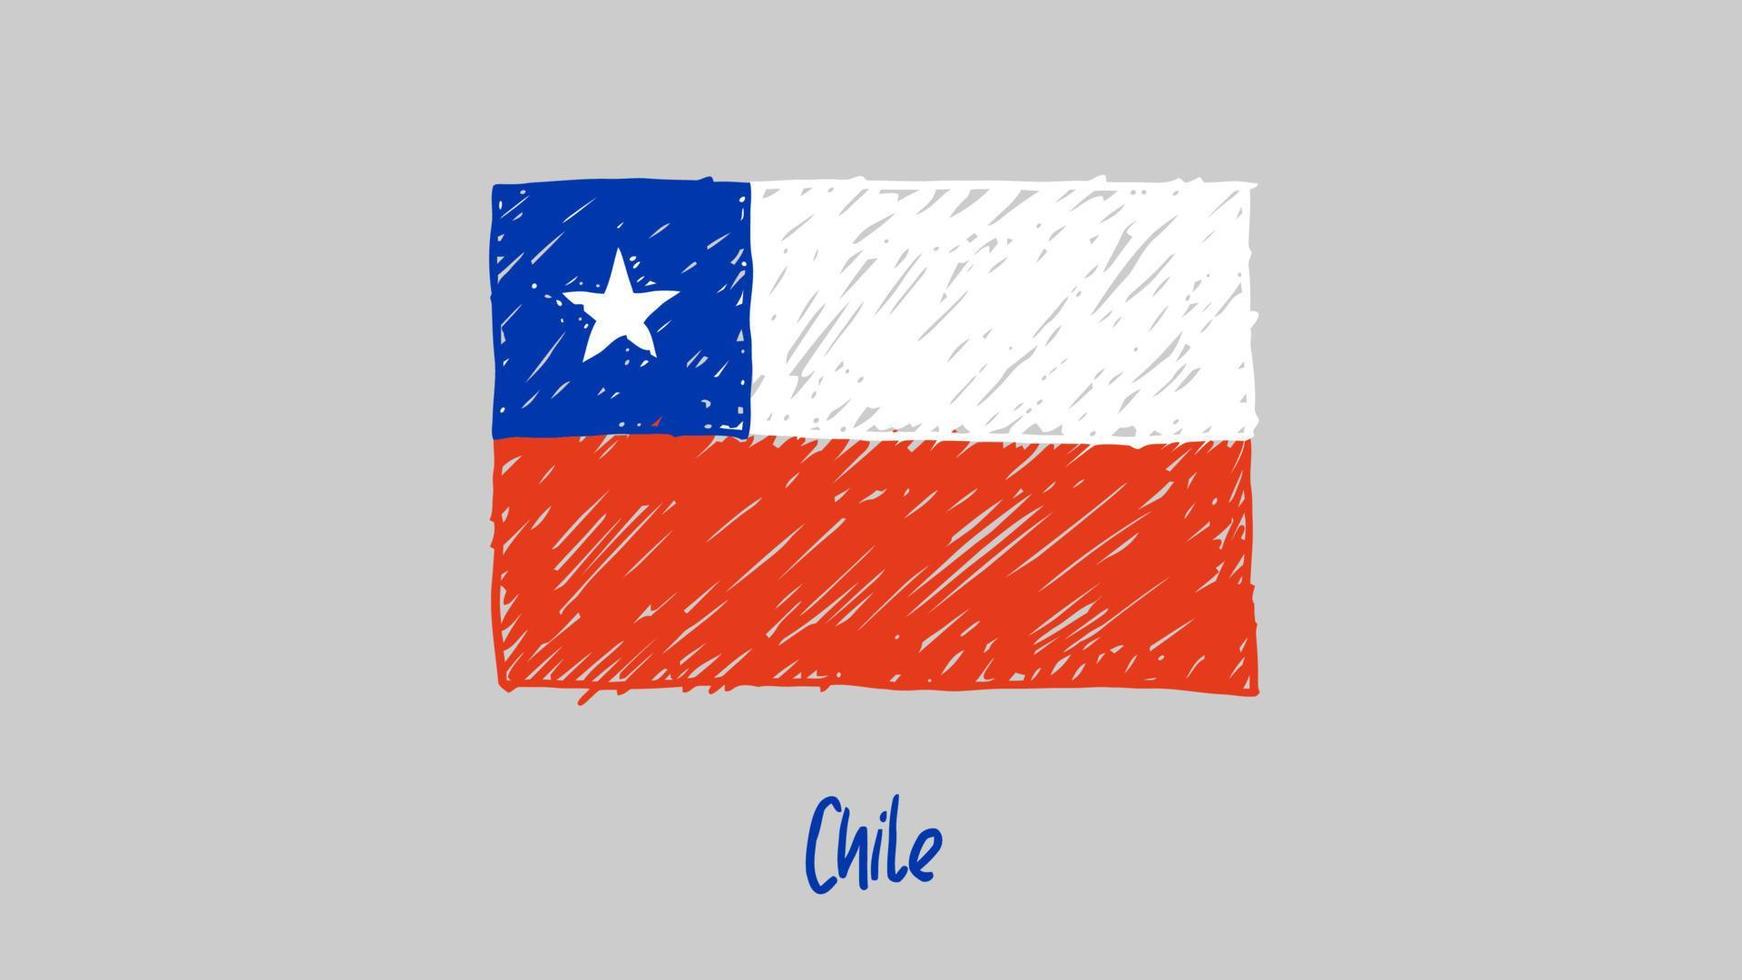 Chili nationale land vlag marker of potlood schets illustratie vector